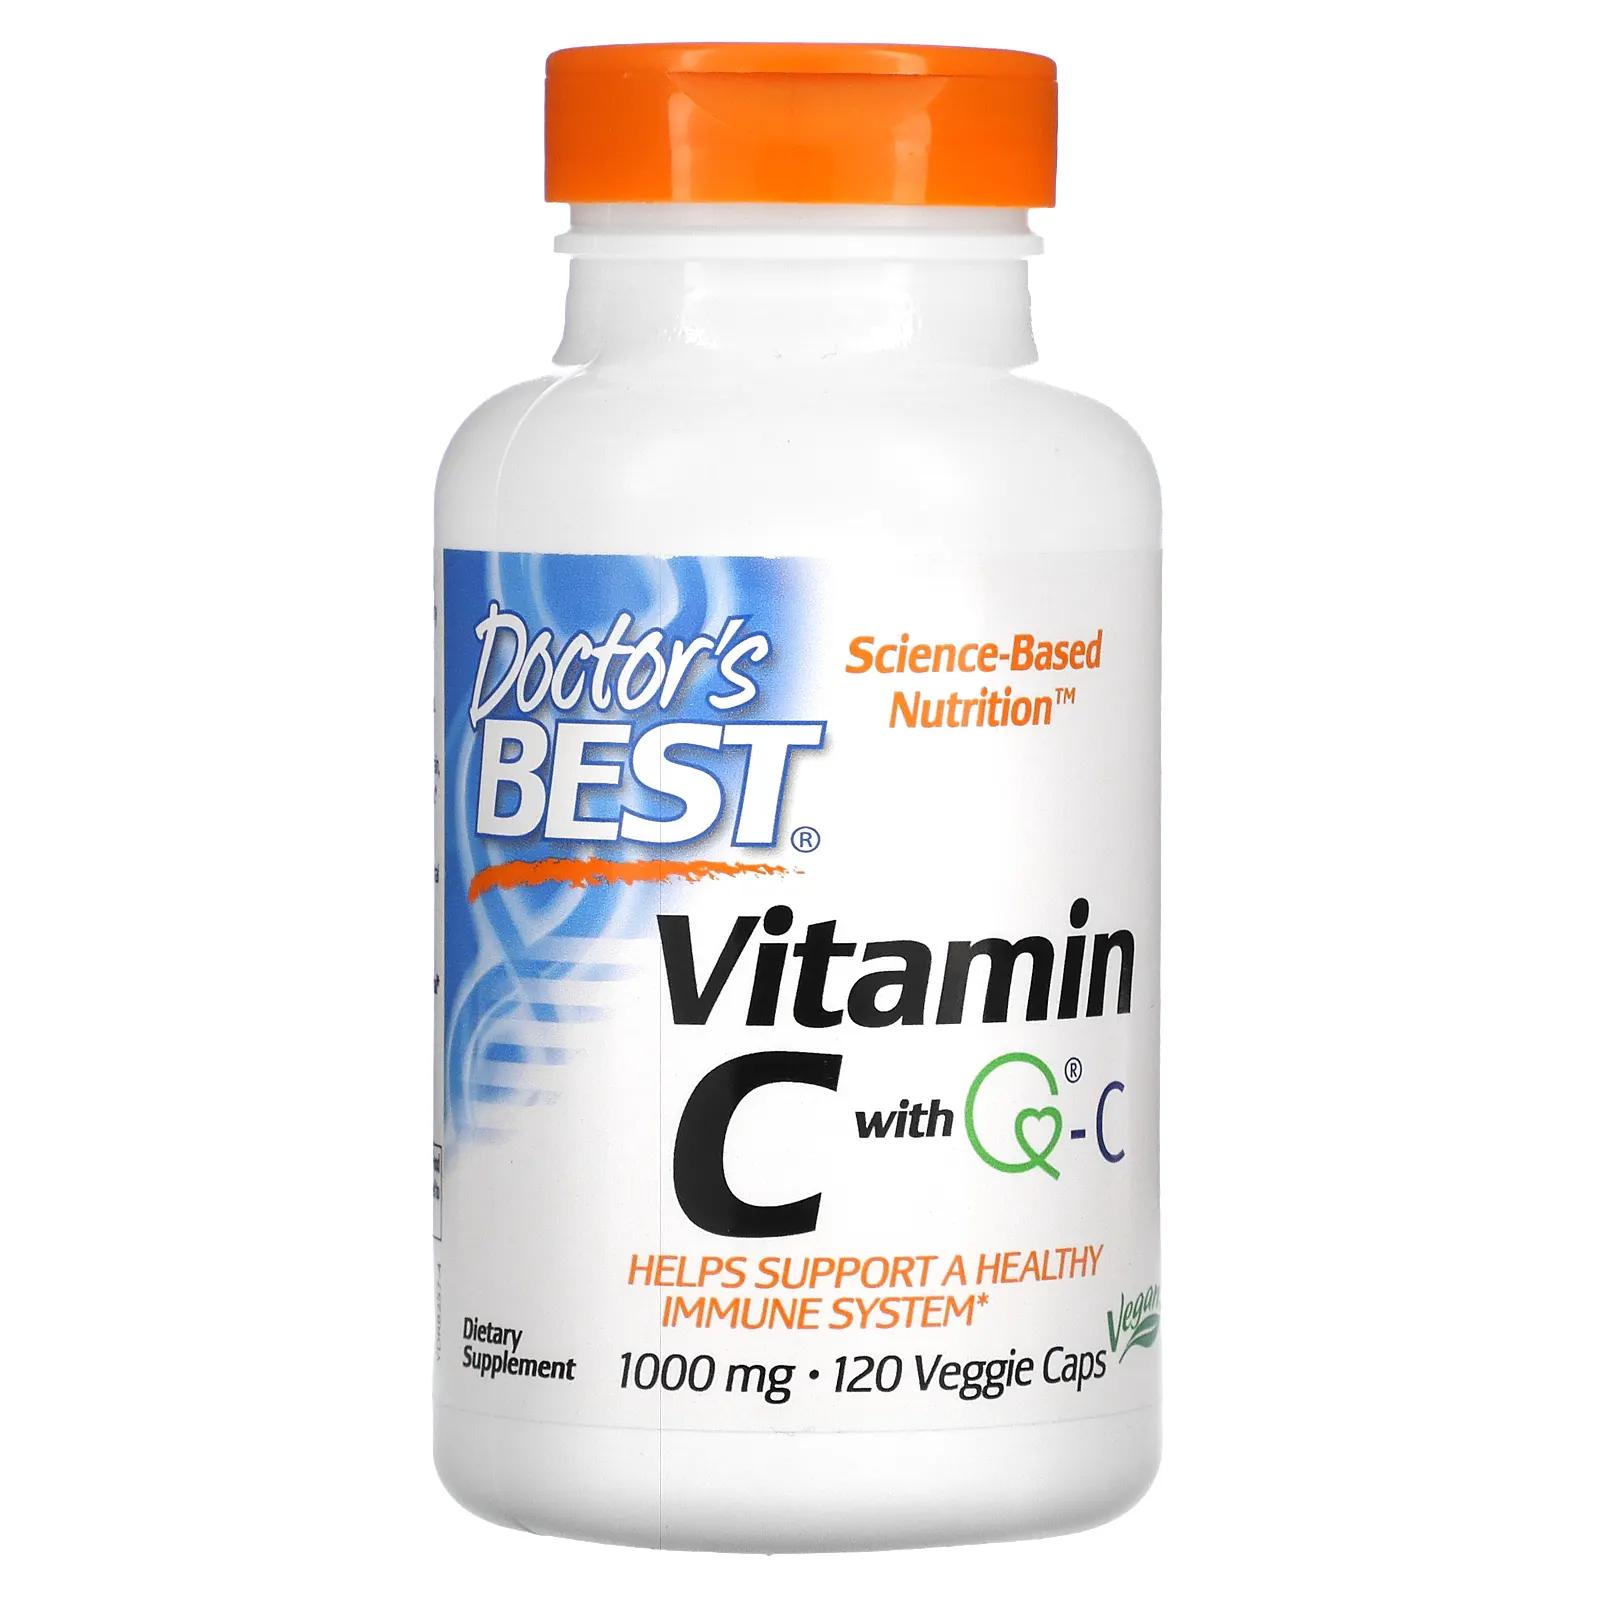 Doctor's Best Vitamin C with Q-C 1,000 mg 120 Veggie Caps